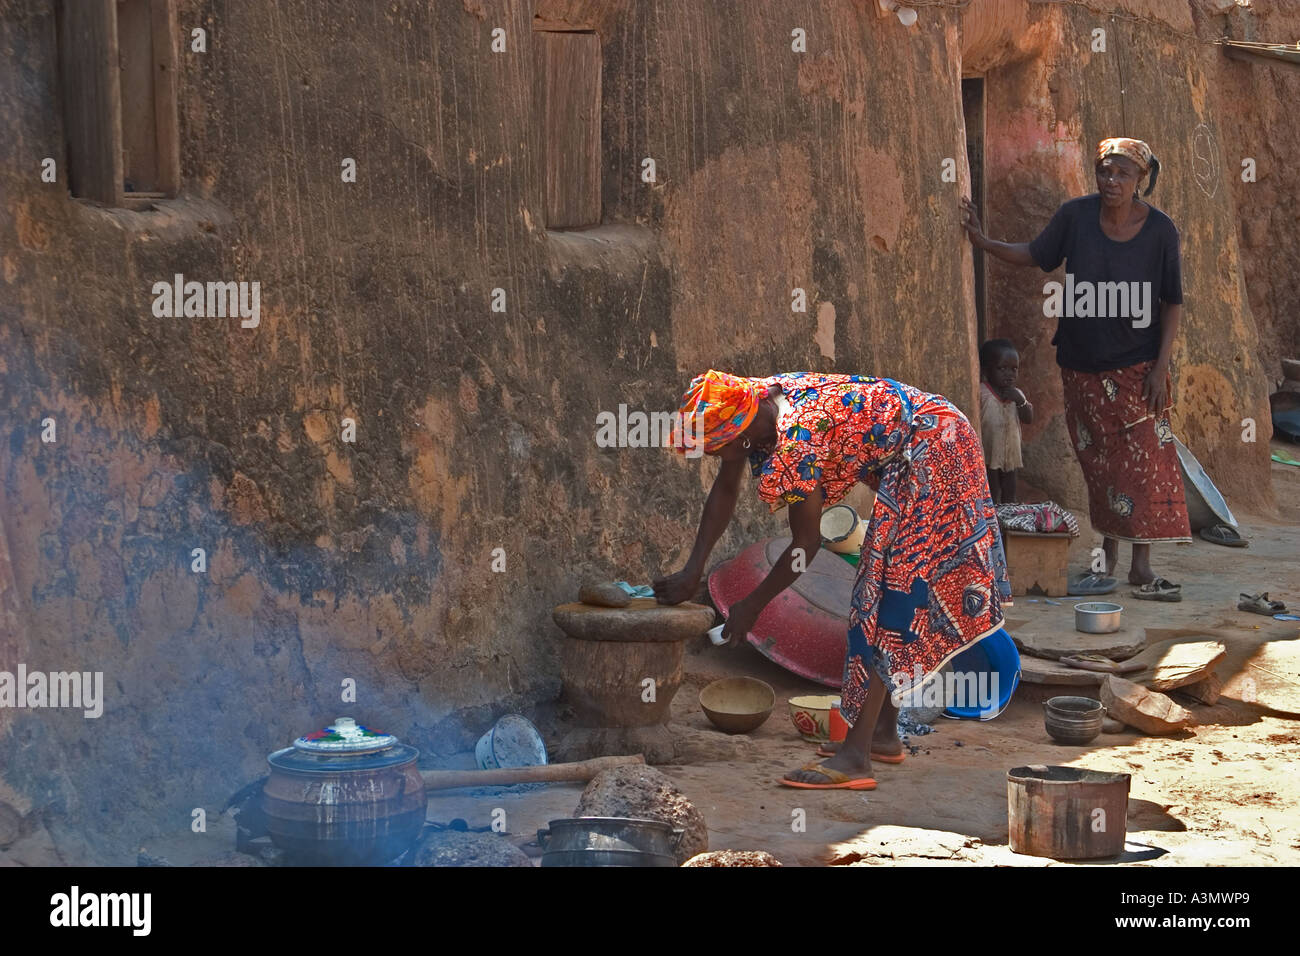 Village woman, Larabanga, Ghana, preparing food for cooking on open firehouse. Stock Photo